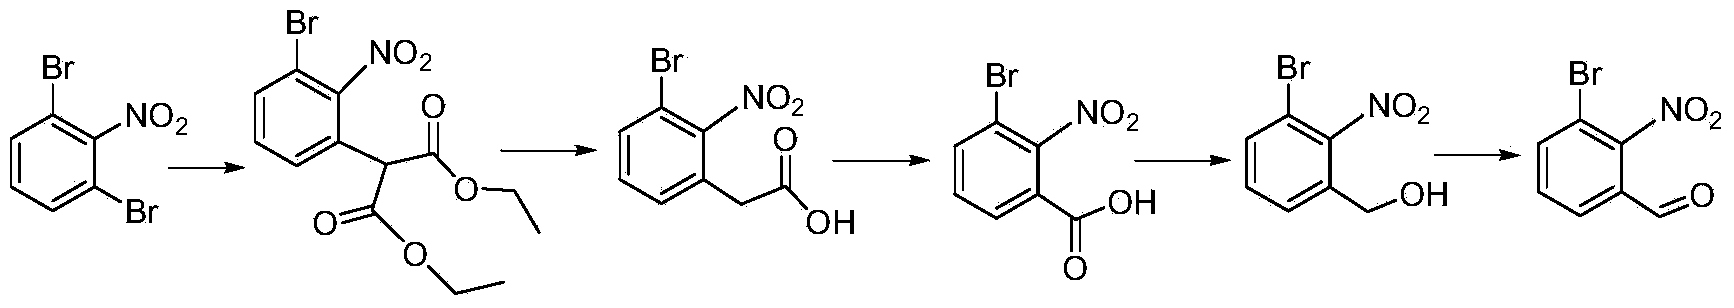 Chemical synthesis method of 3-bromo-2-nitrobenzaldehyde